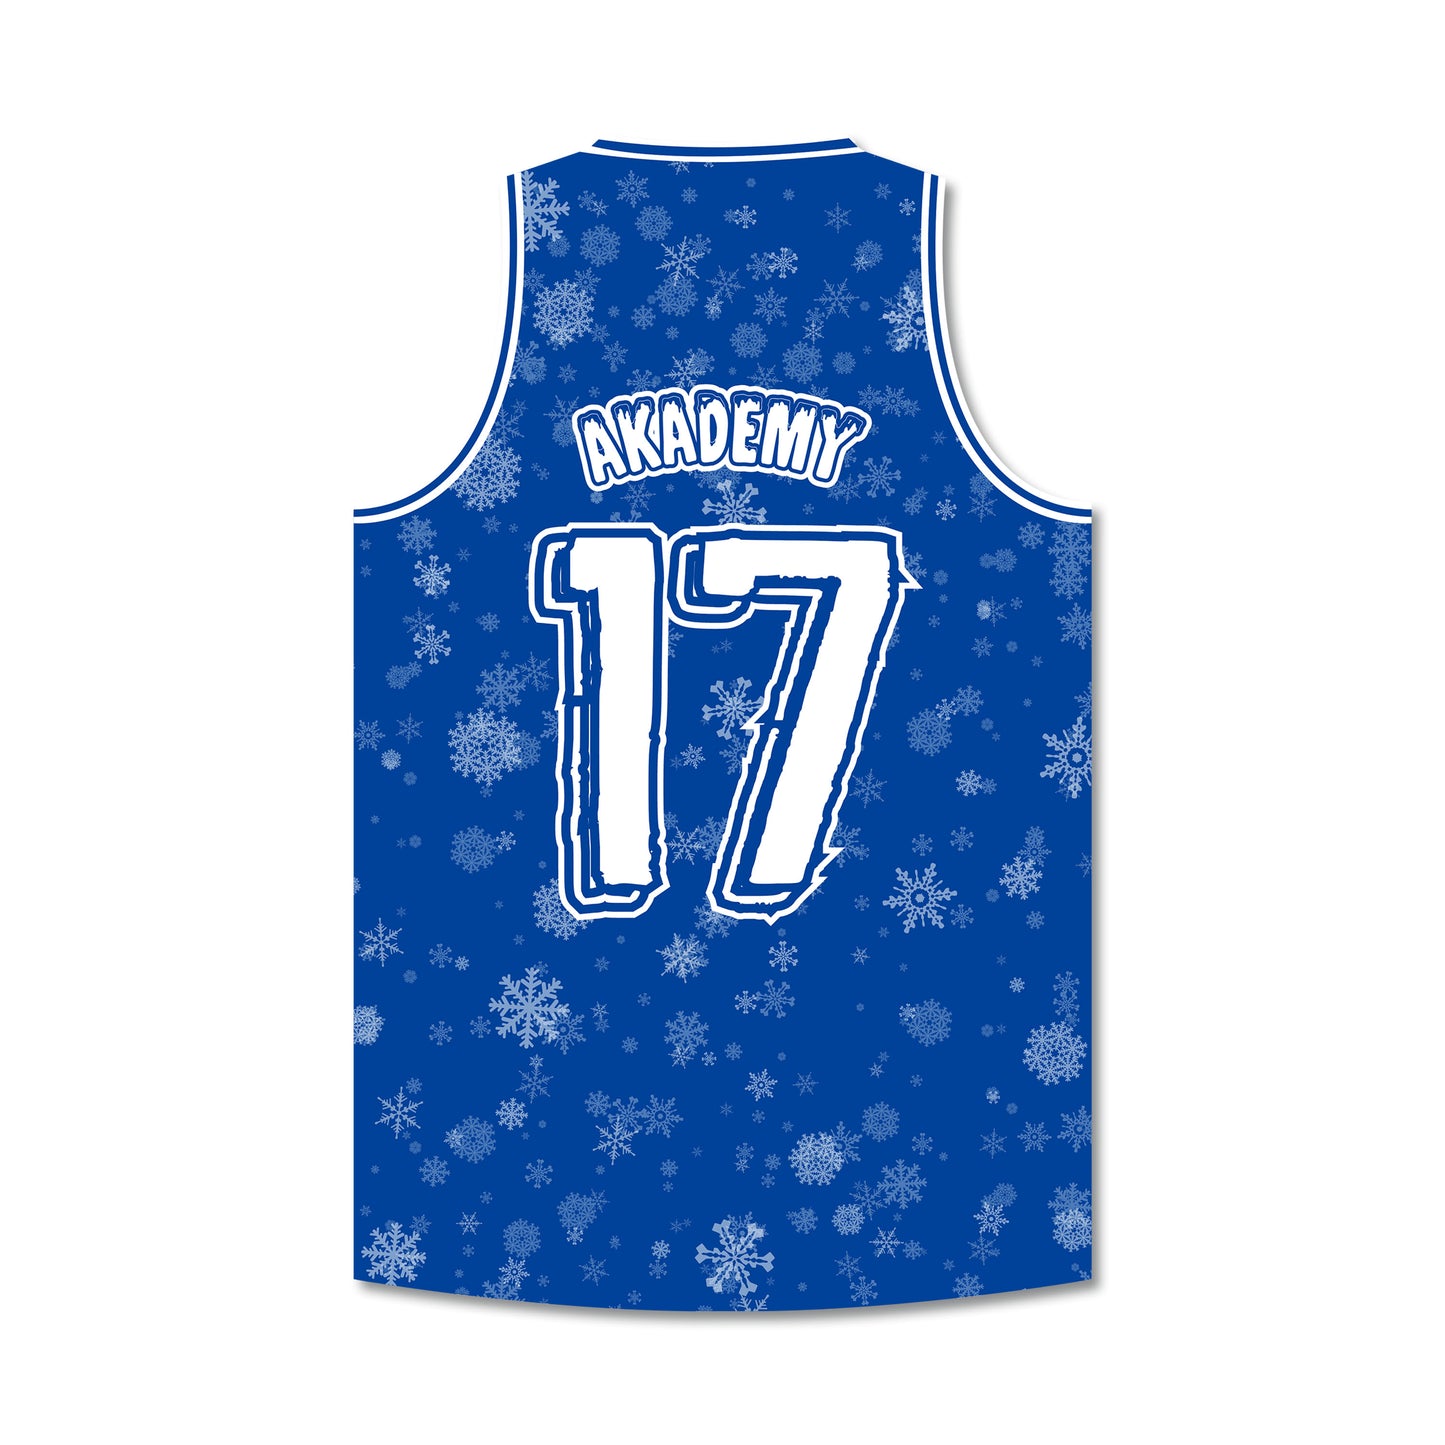 The Akademy Christmas Basketball Jersey